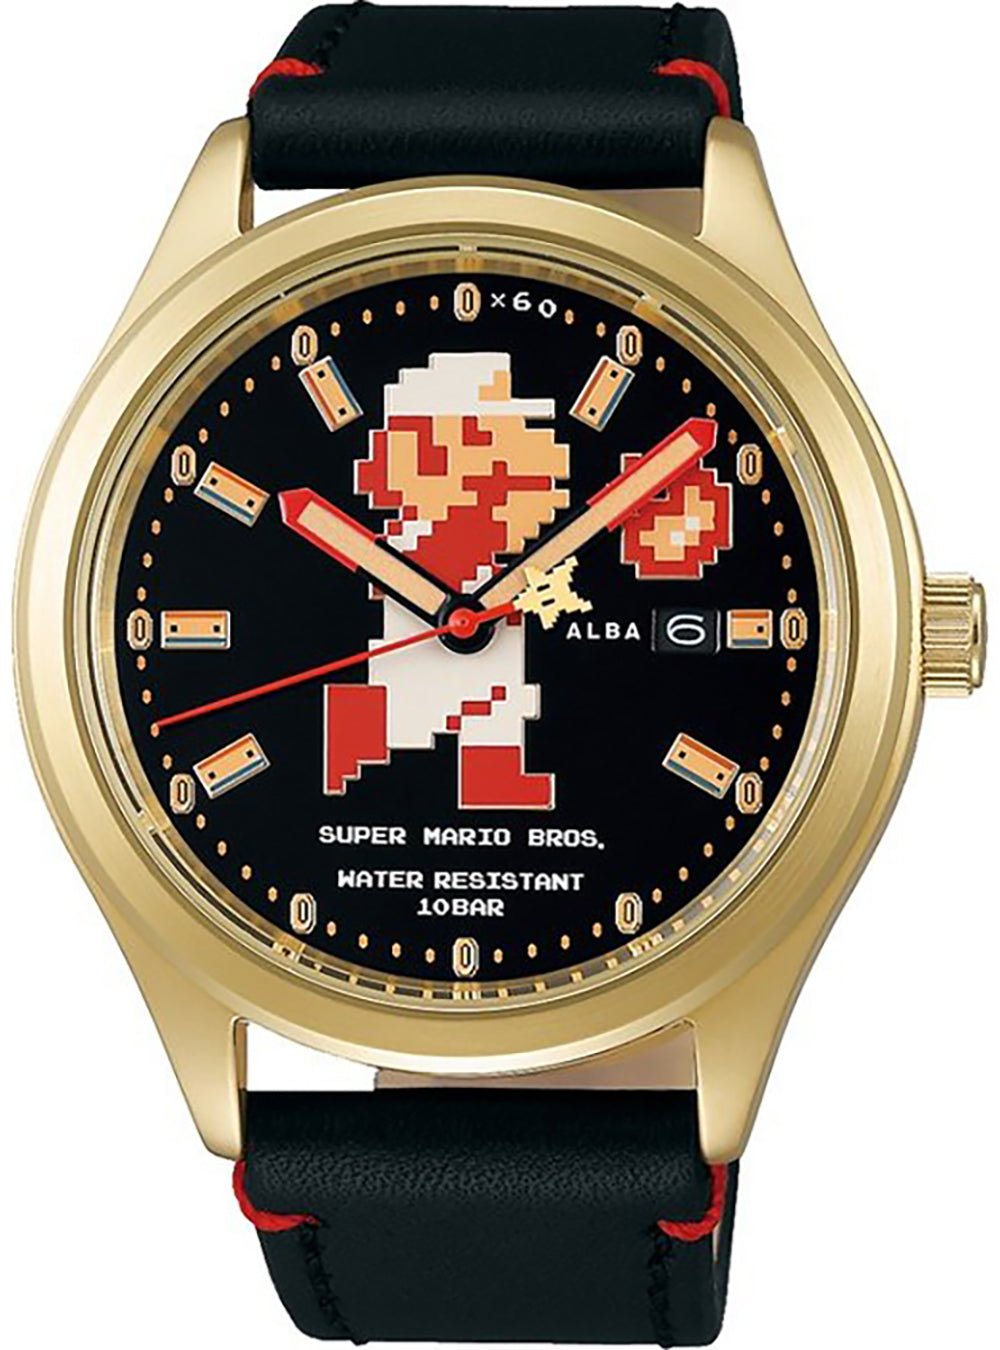 Super Mario Limited Edition Watch | SEIKO ALBA ACCA701 JDM